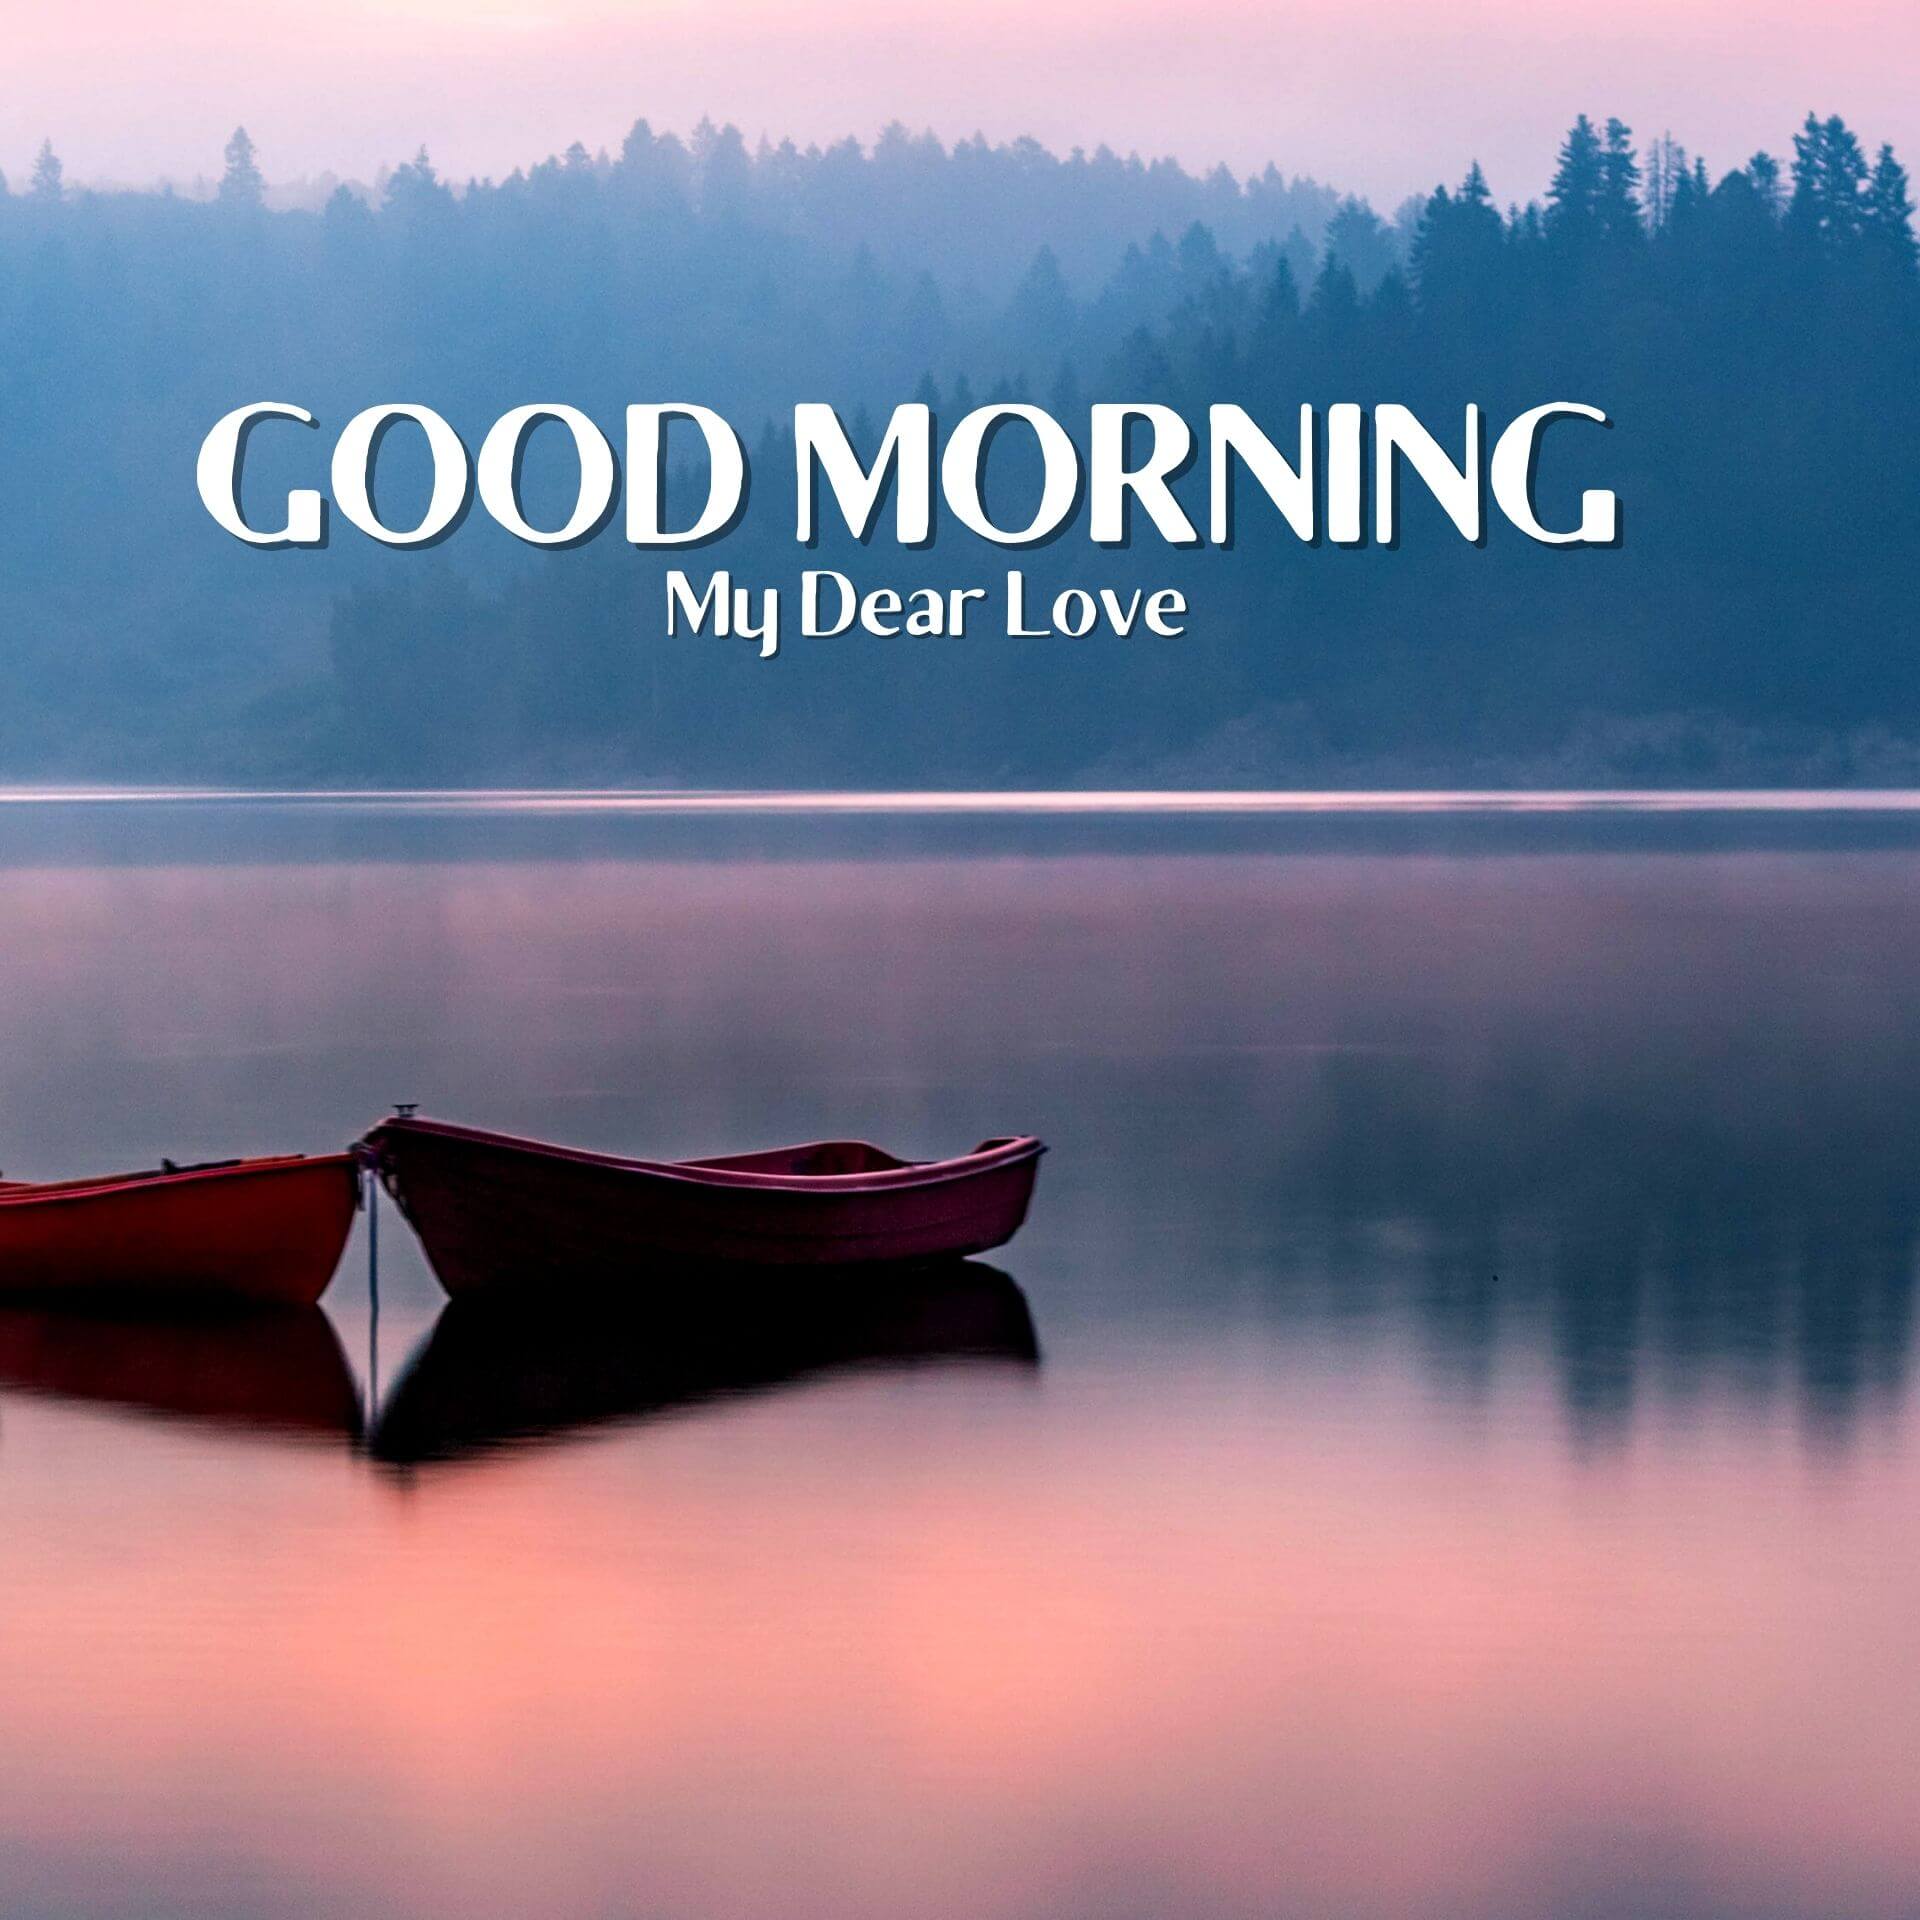 Romantic Good Morning Pics Wallpaper for Facebook